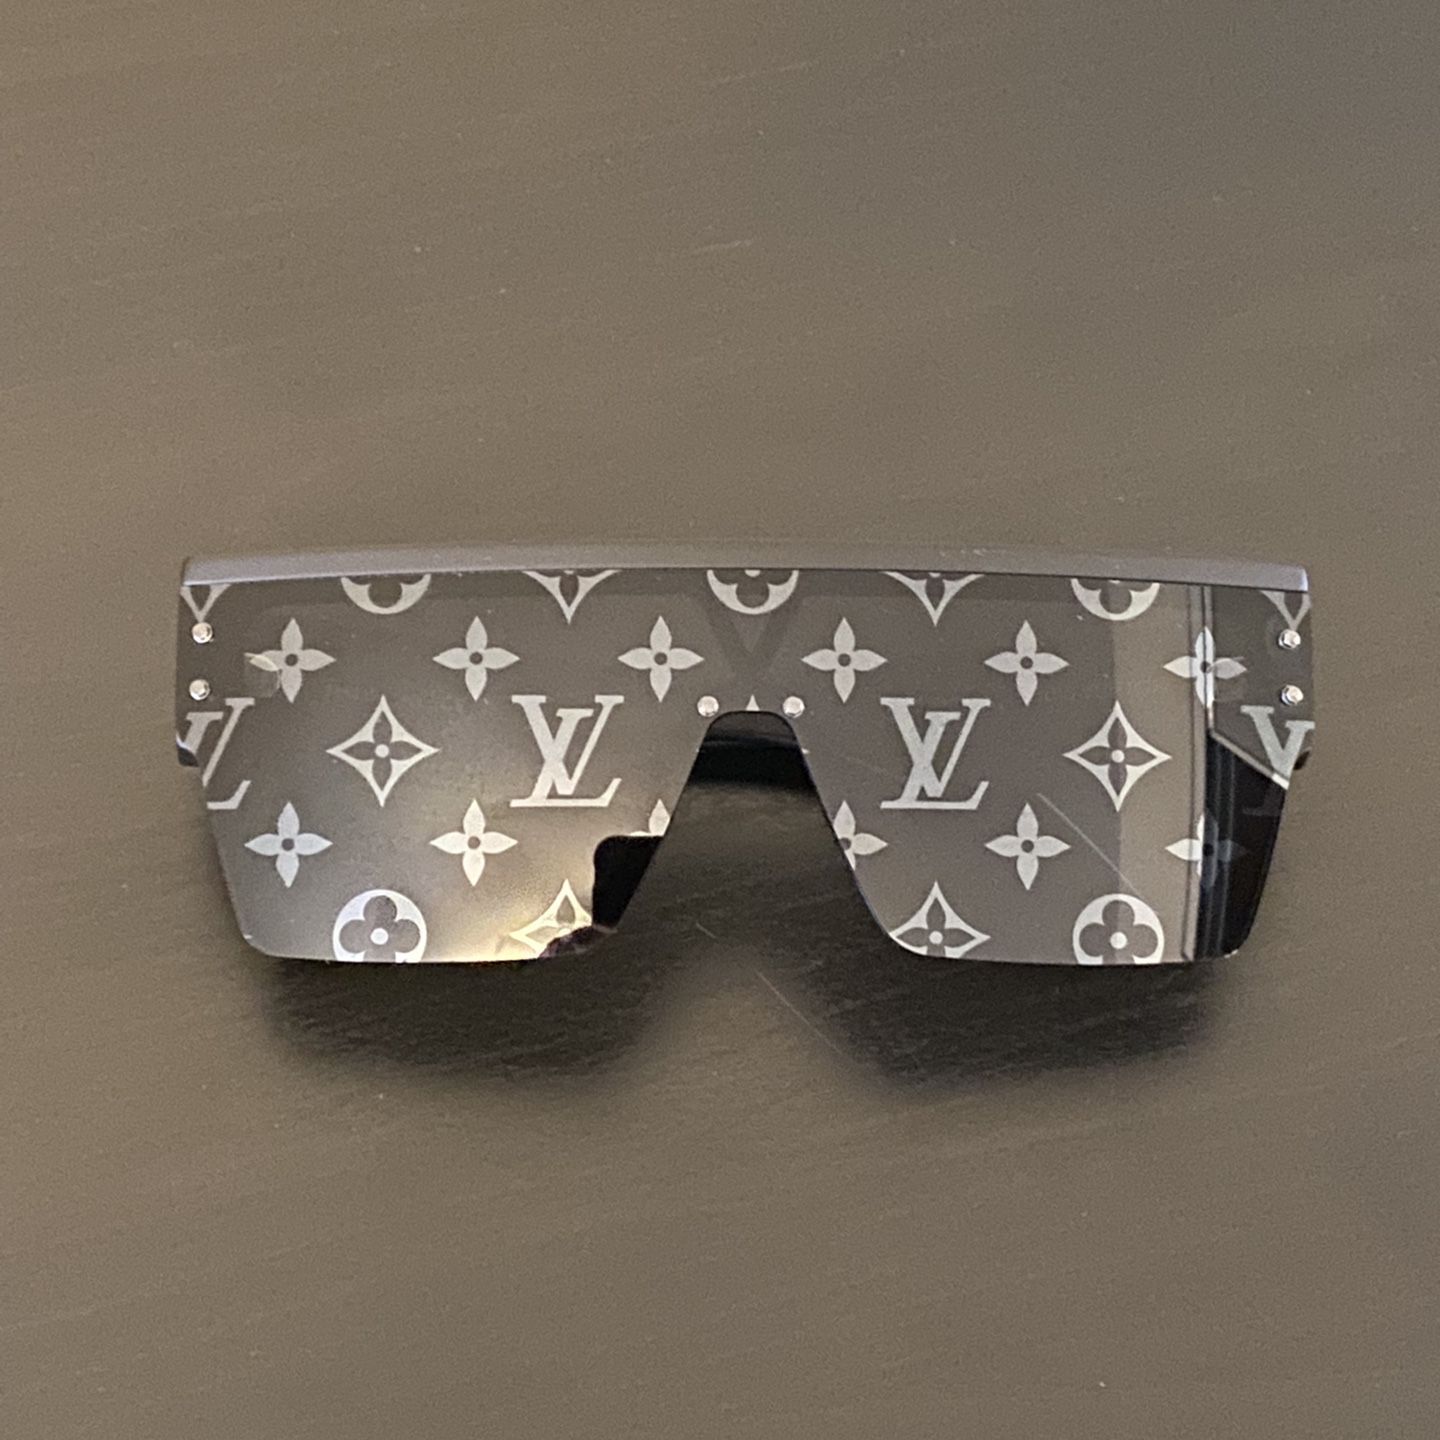 LV Waimea Sunglasses 2108W for Sale in Irvine, CA - OfferUp